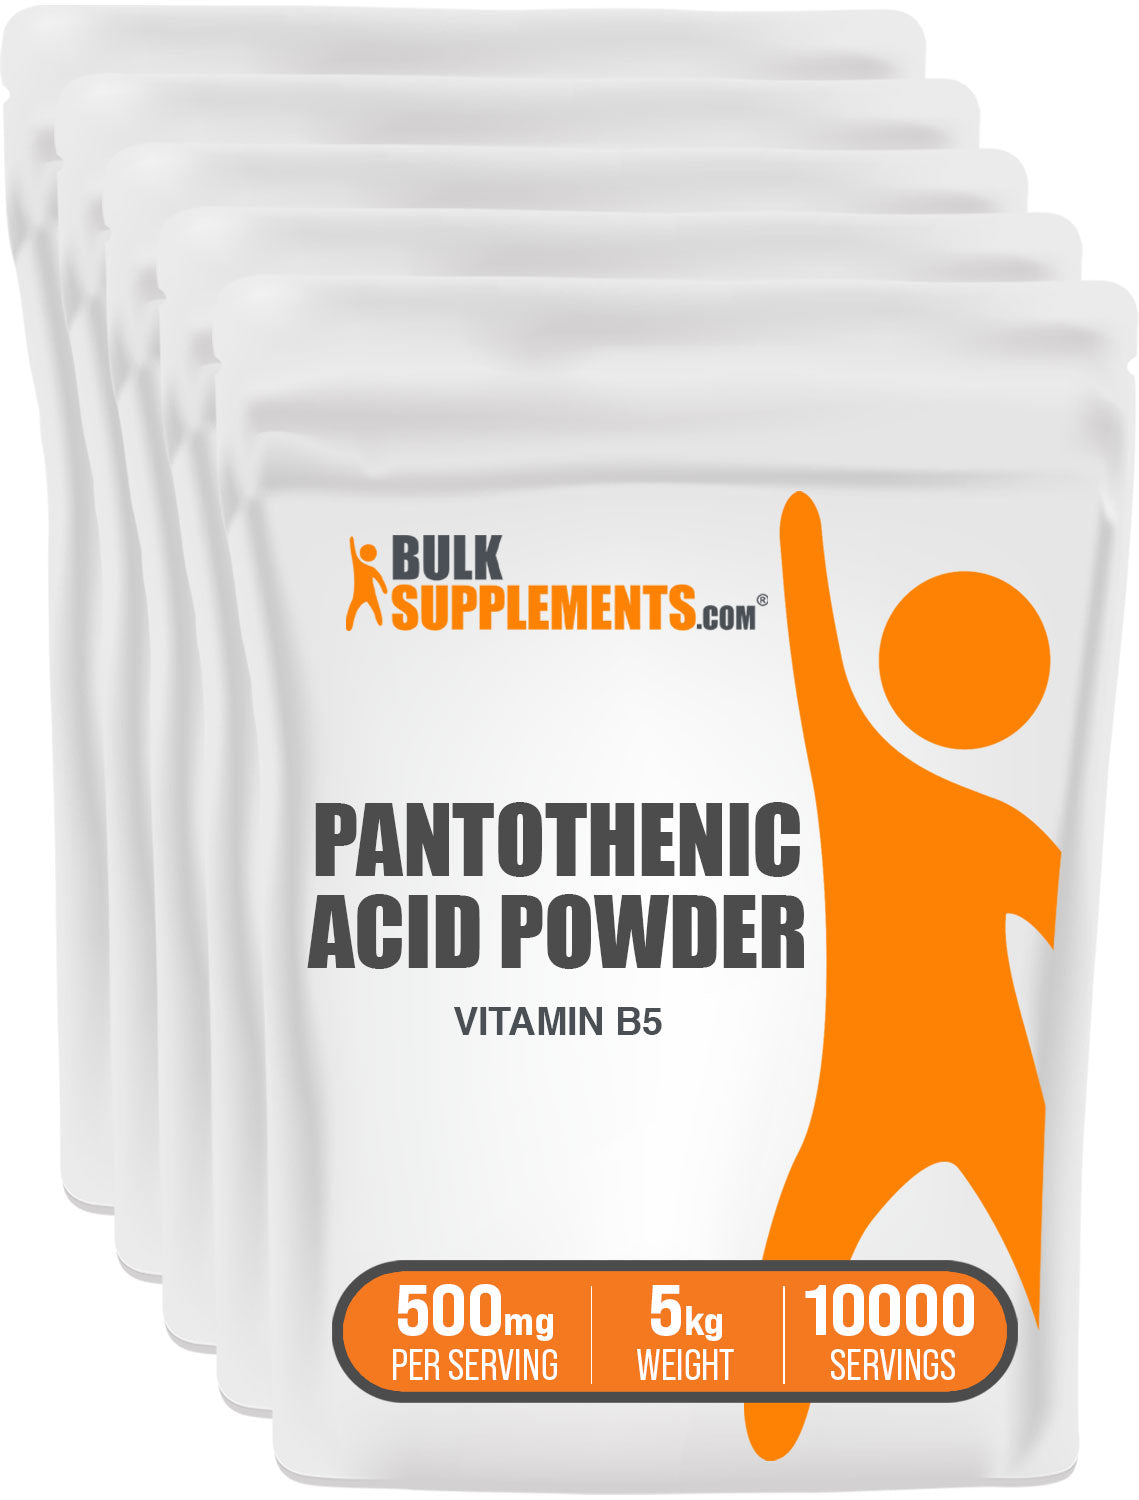 BulkSupplements Pantothenic Acid Powder Vitamin B5 5kg bag